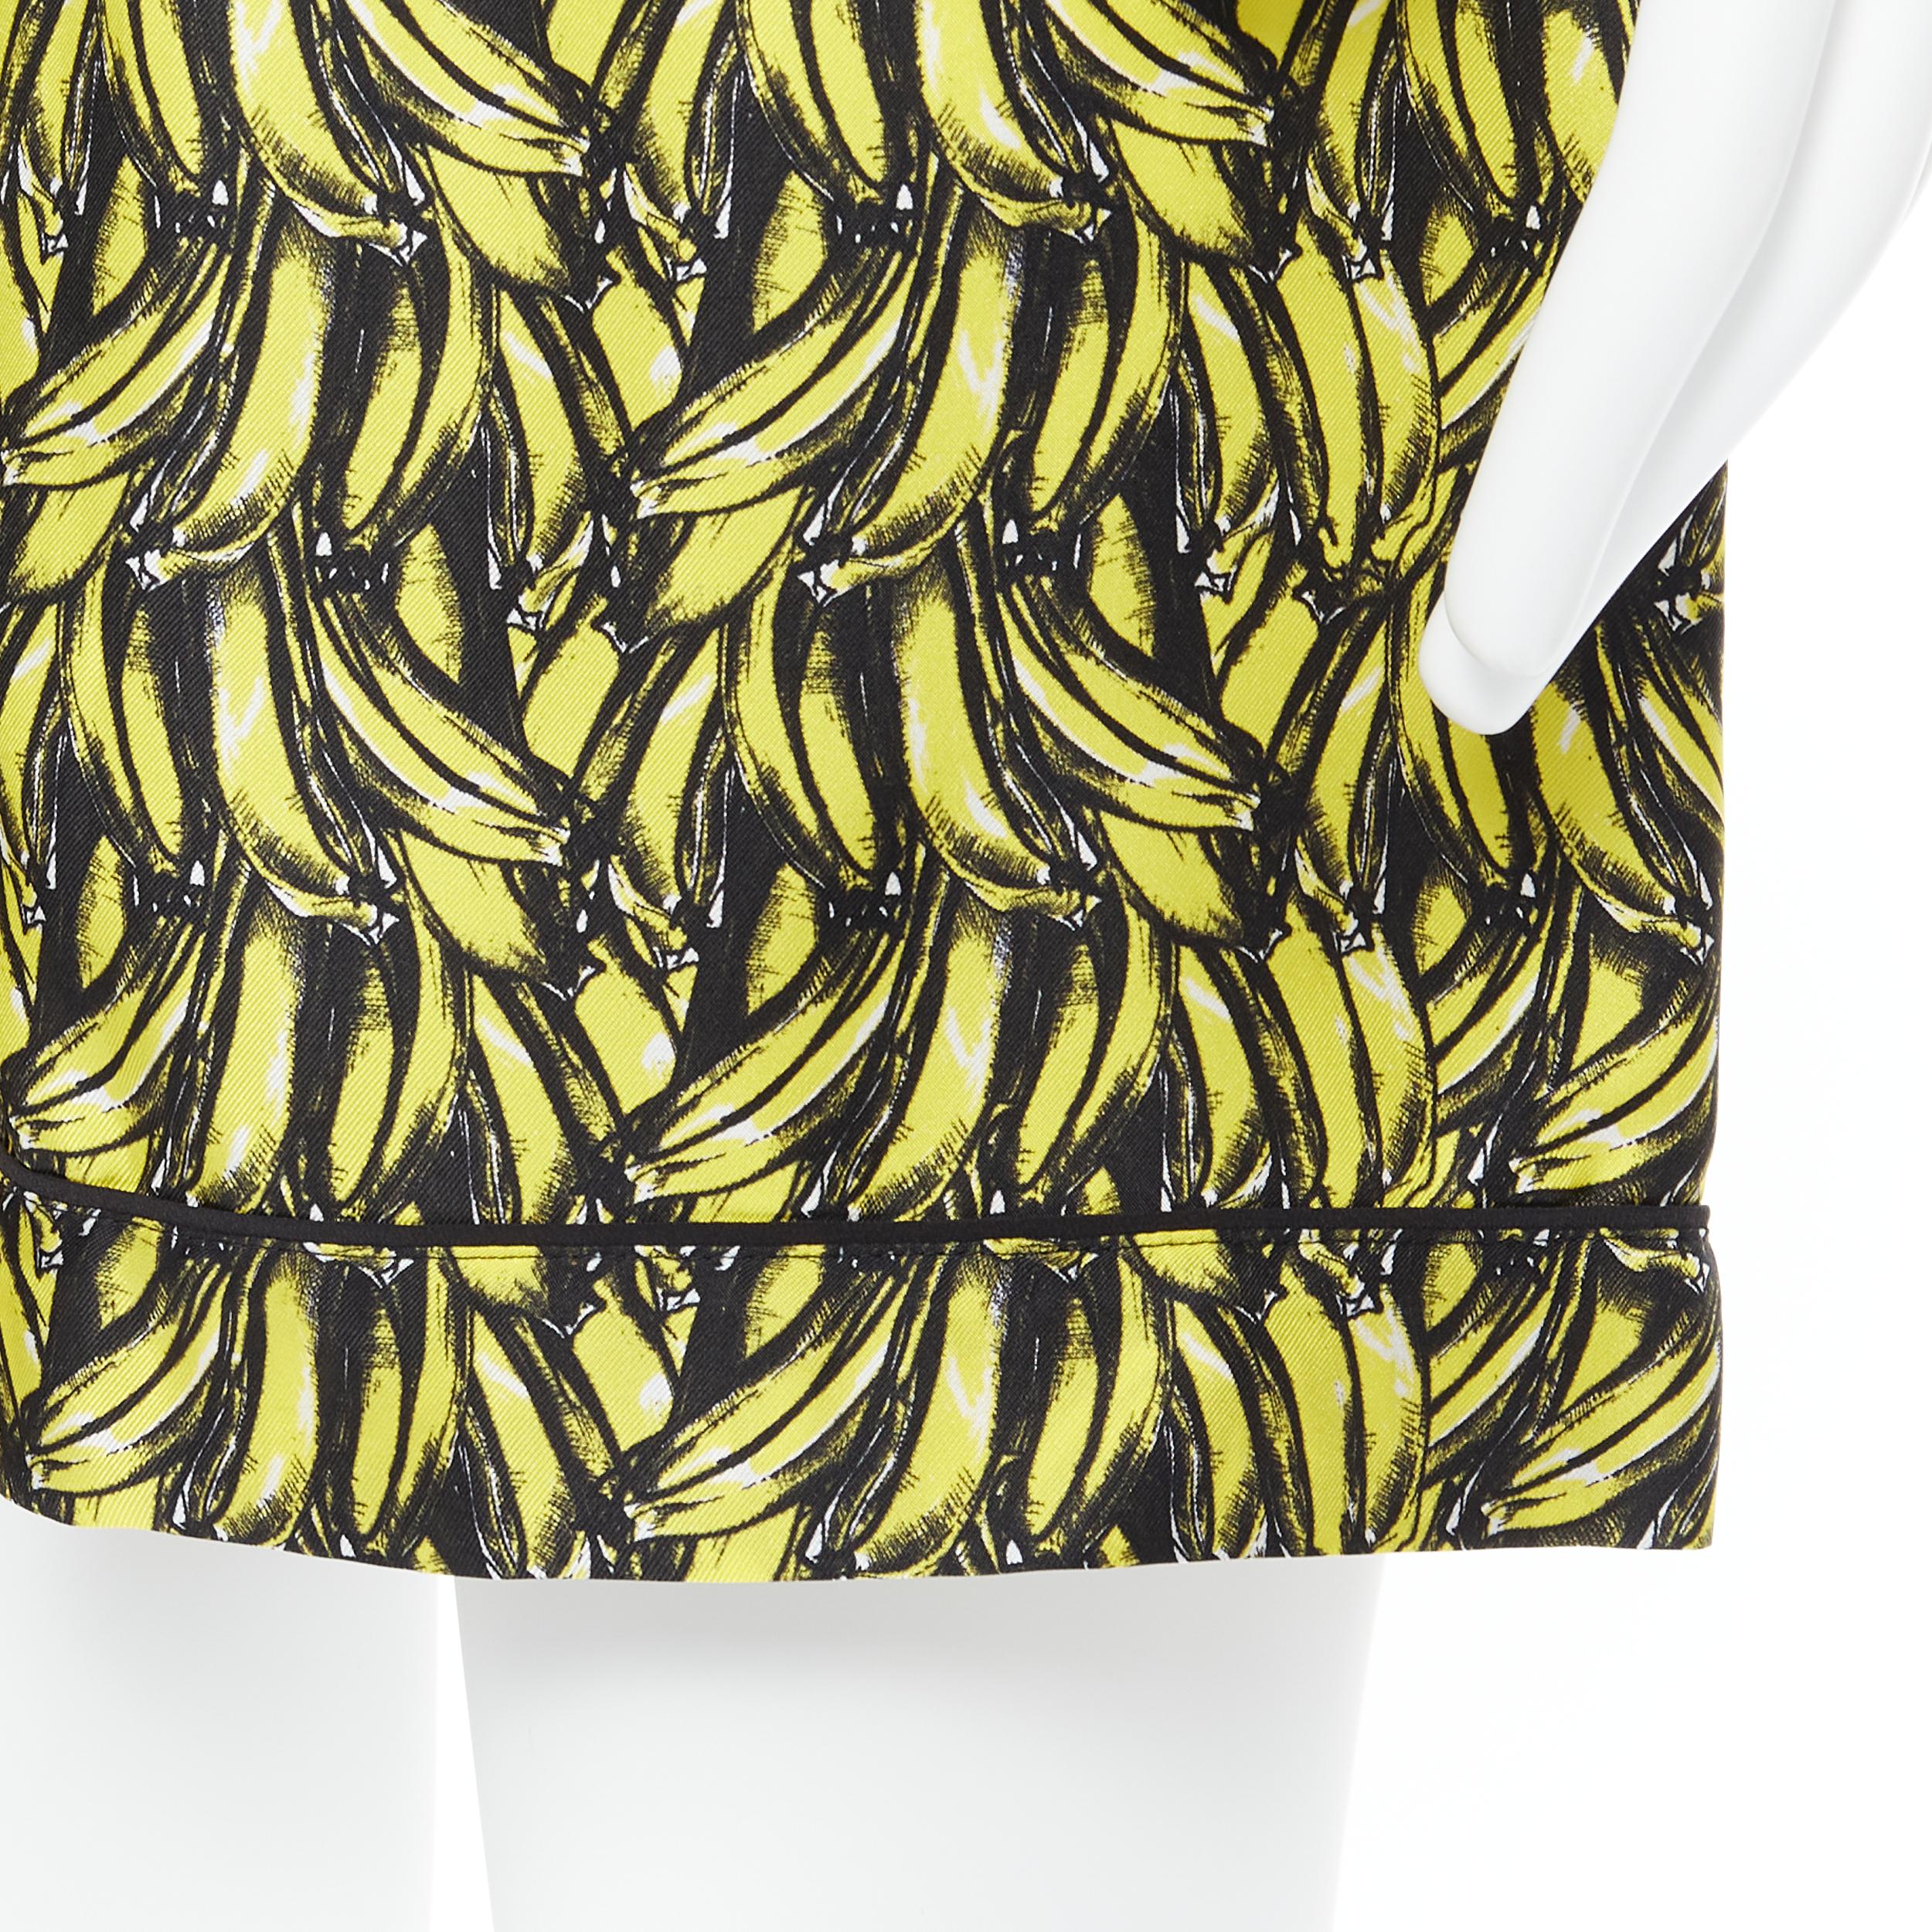 new PRADA iconic banana print 100% silk elasticated waist boxer summer shorts S Reference: TGAS/B00380 
Brand: Prada 
Designer: Miuccia Prada 
Material: Silk 
Color: Yellow 
Pattern: Other Closure: Button Extra Detail: Elasticated waist. Button fly